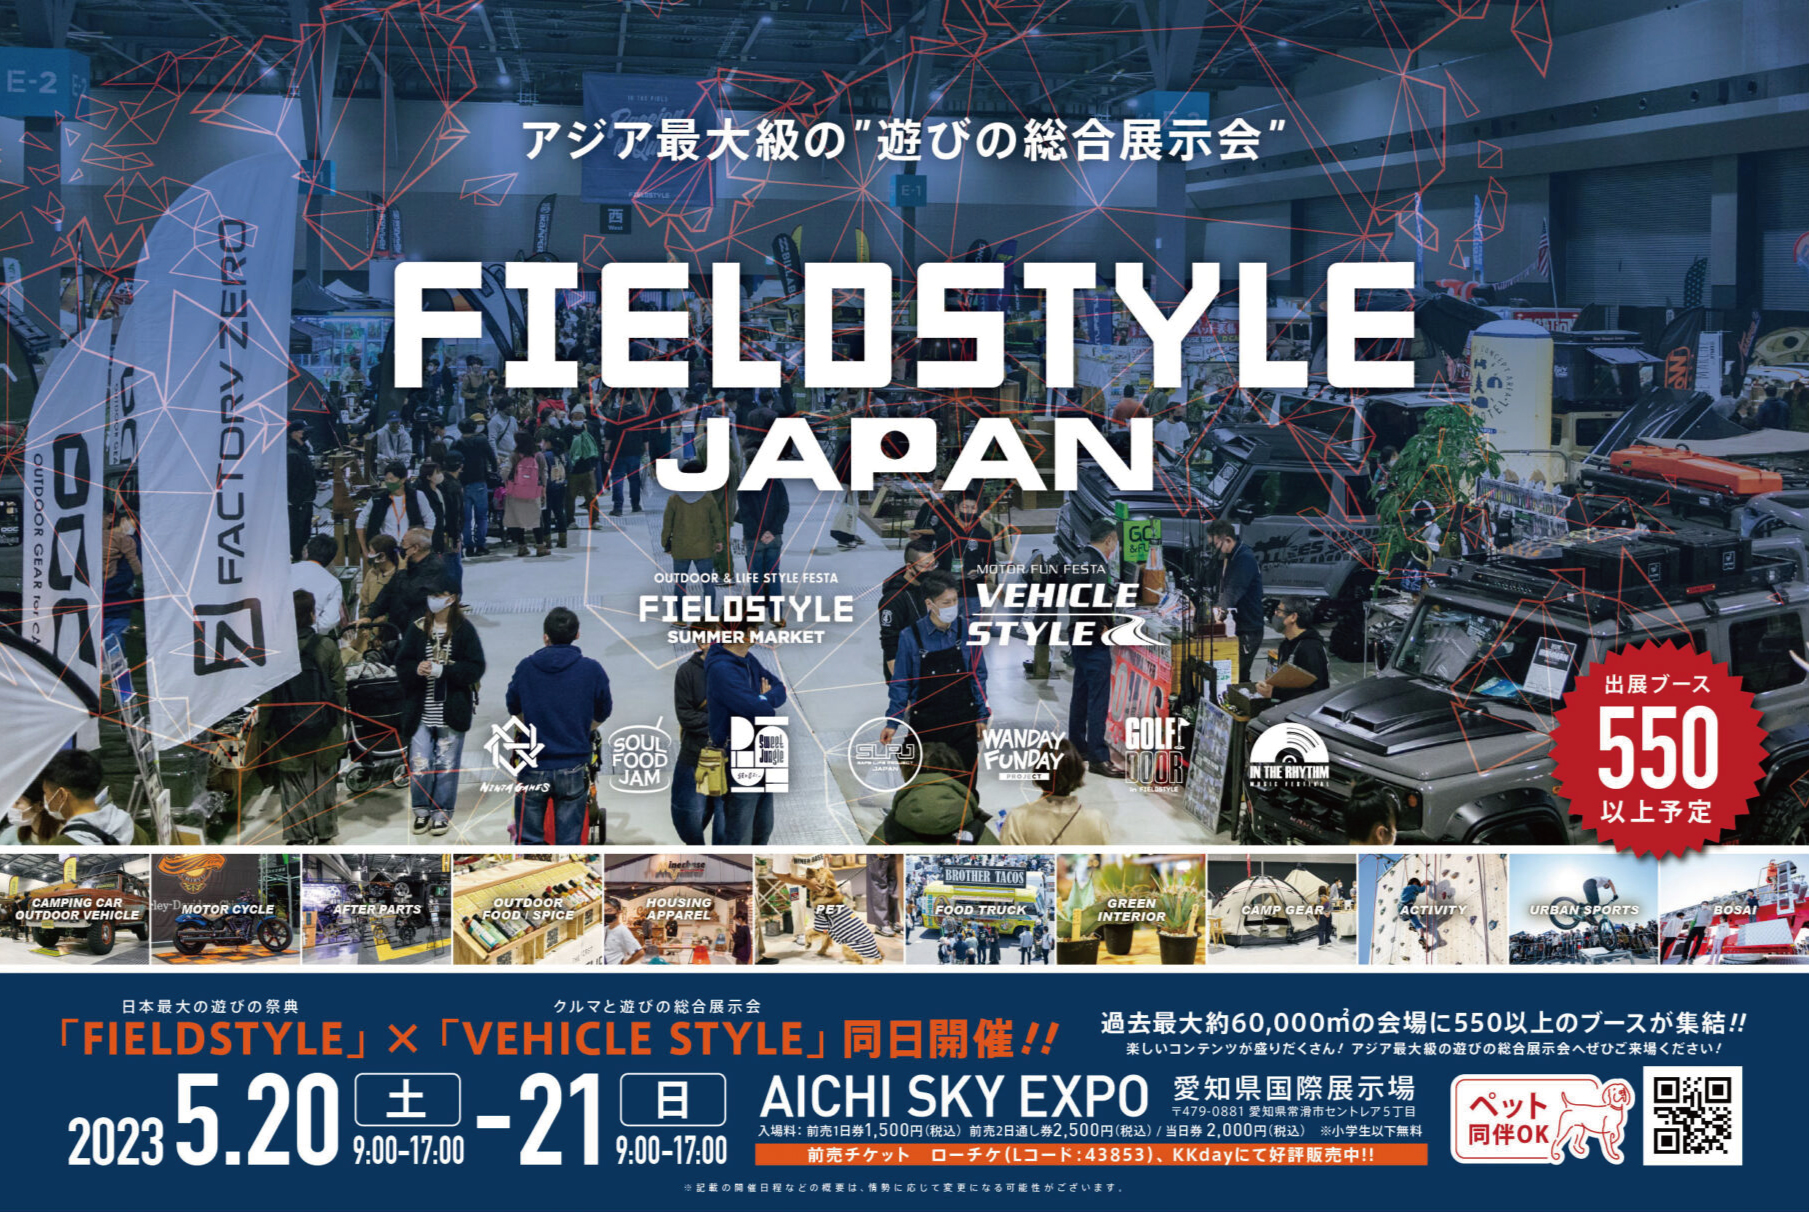 FIELDSTYLE JAPAN 2023 に出展します！